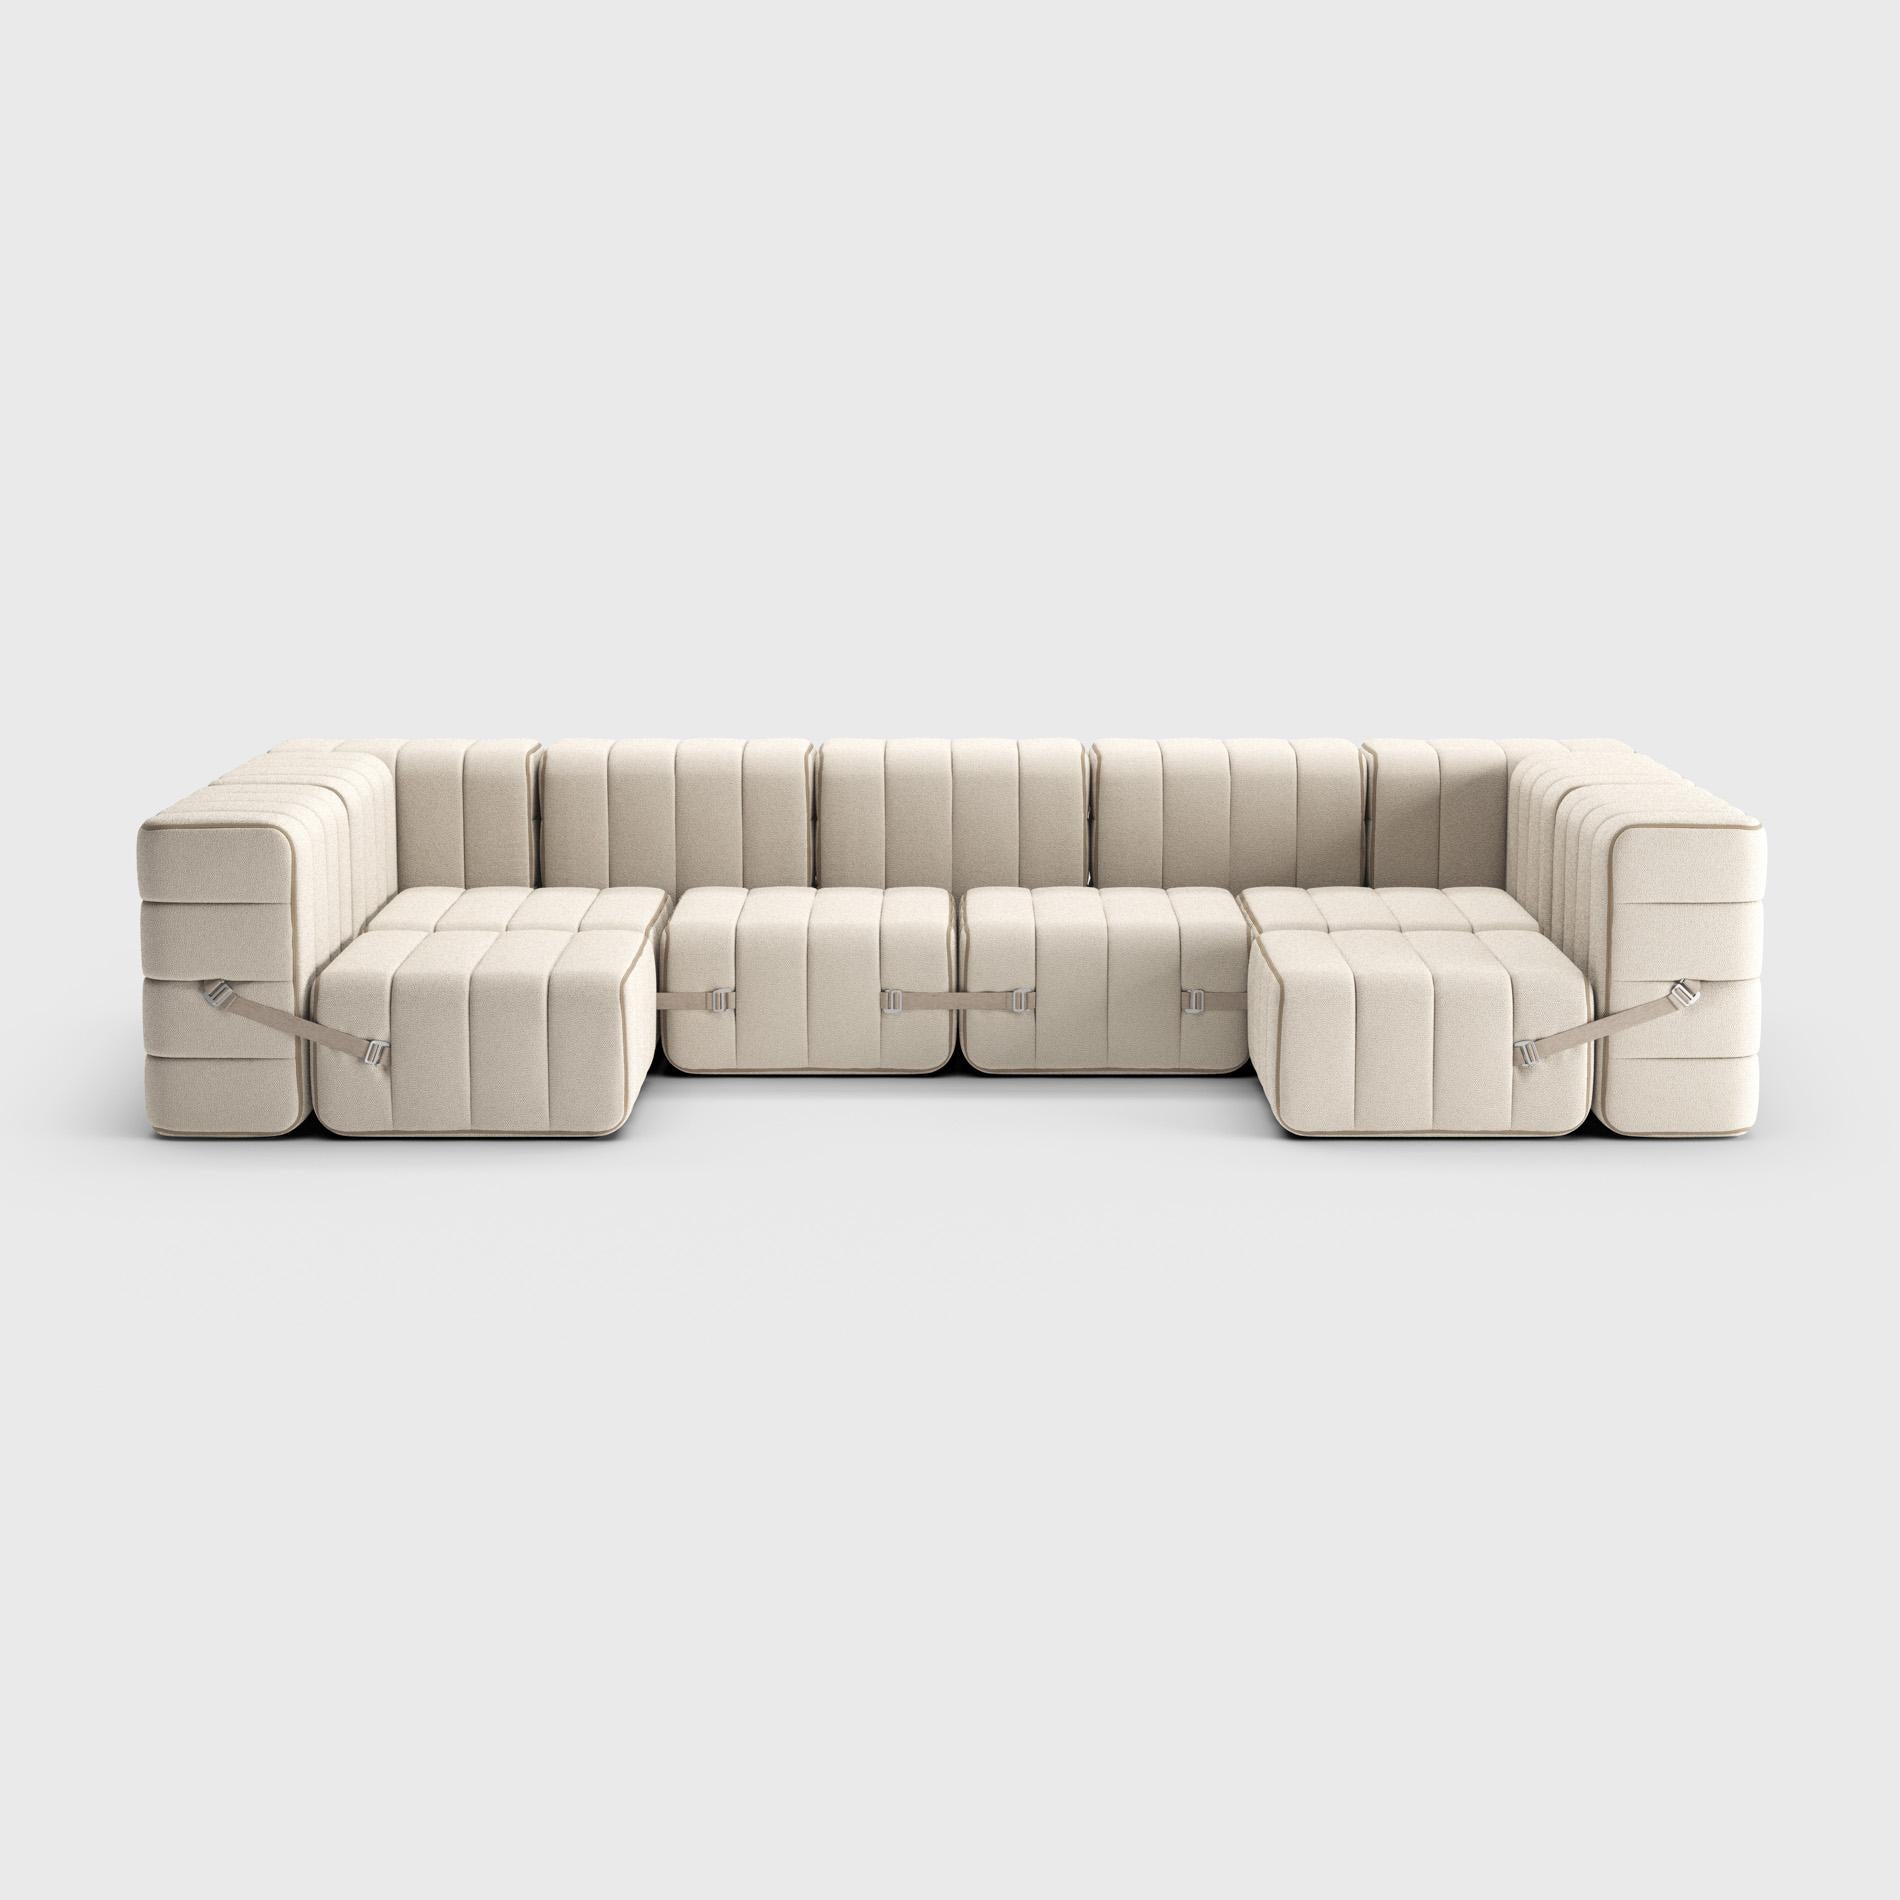 Curt Single Module, Fabric Sera 'Calla White / Beige', Curt Modular Sofa System In New Condition For Sale In Berlin, BE